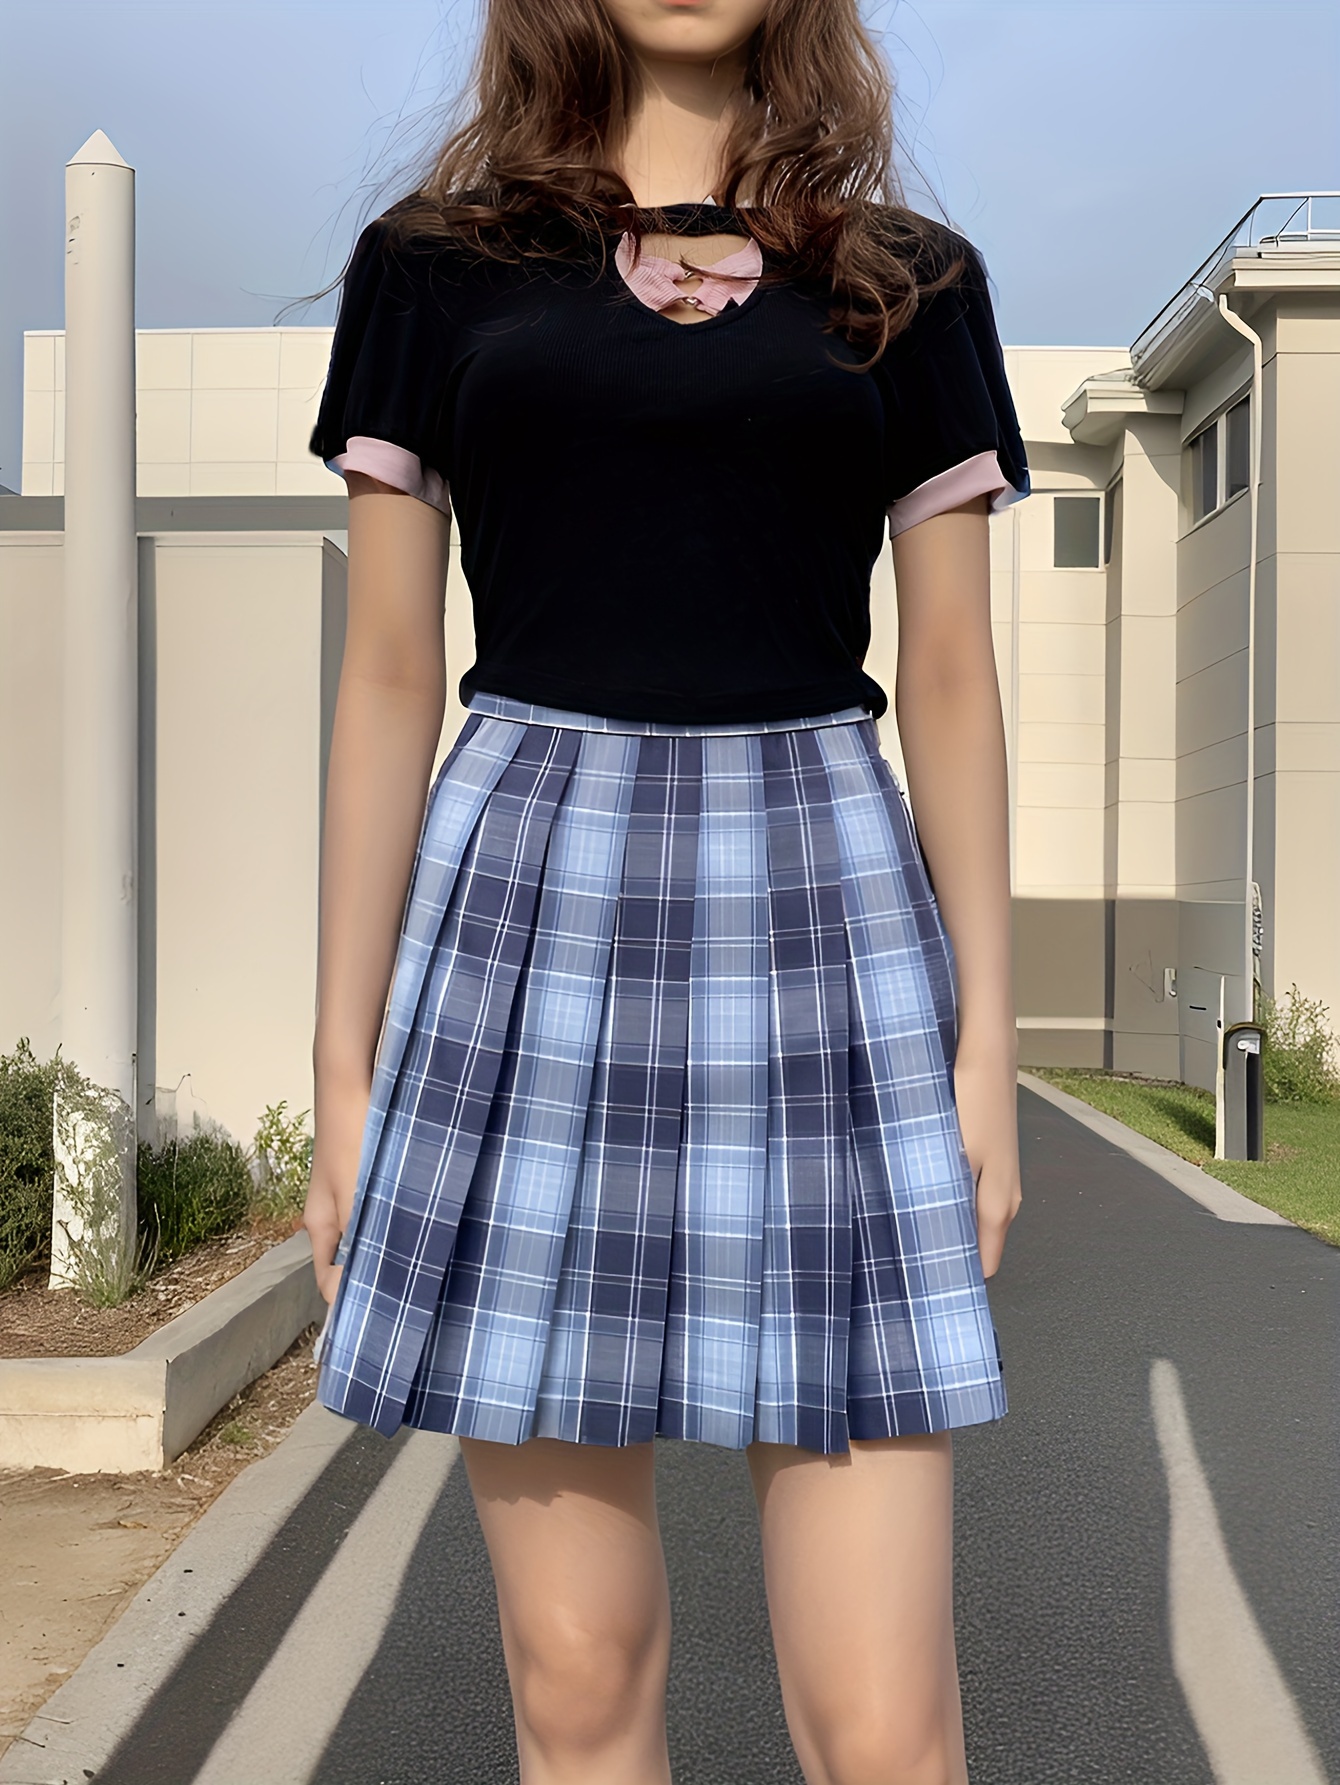 High Waist Tucked Skirt, Solid Color Flare Mini Skirt, Women's Clothing